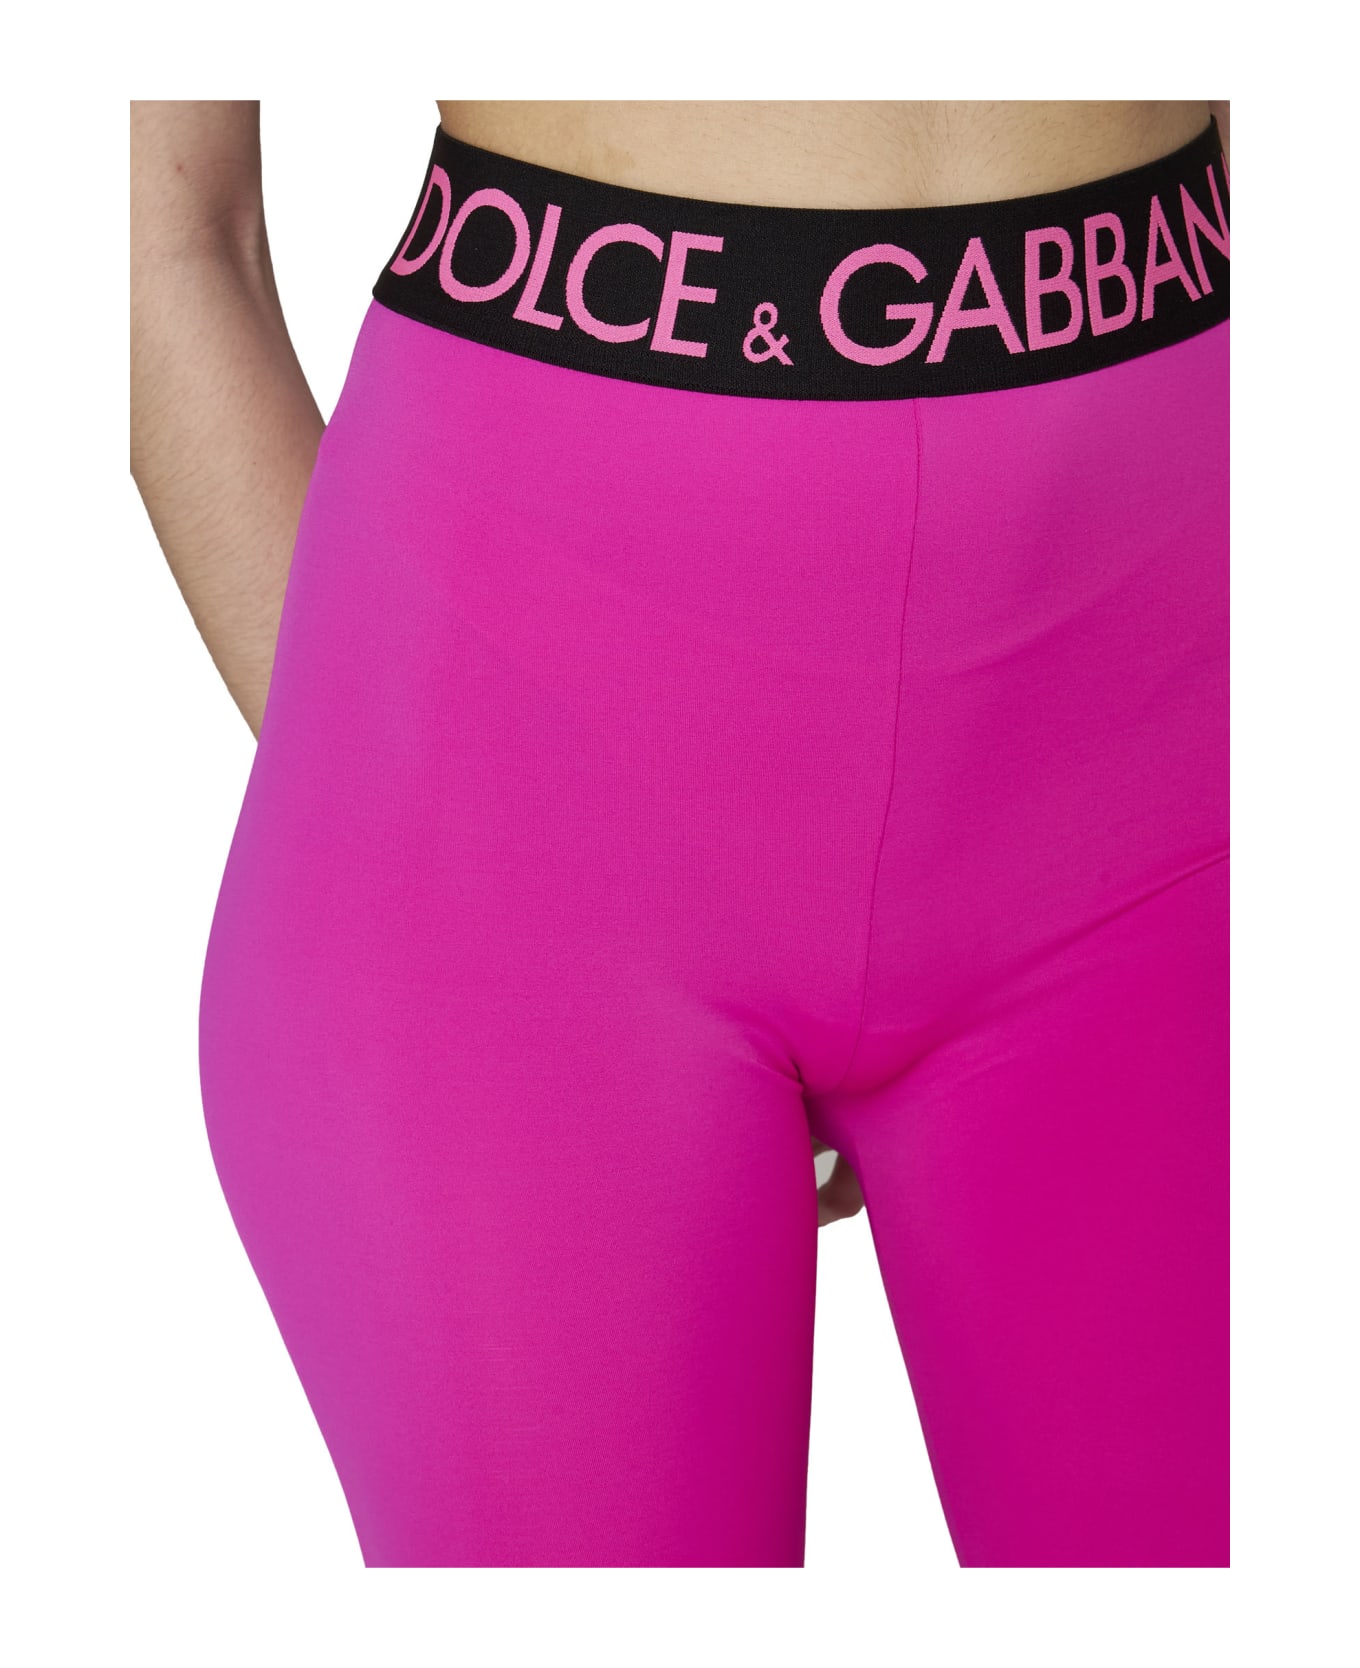 Dolce & Gabbana Leggings - Fucsia レギンス